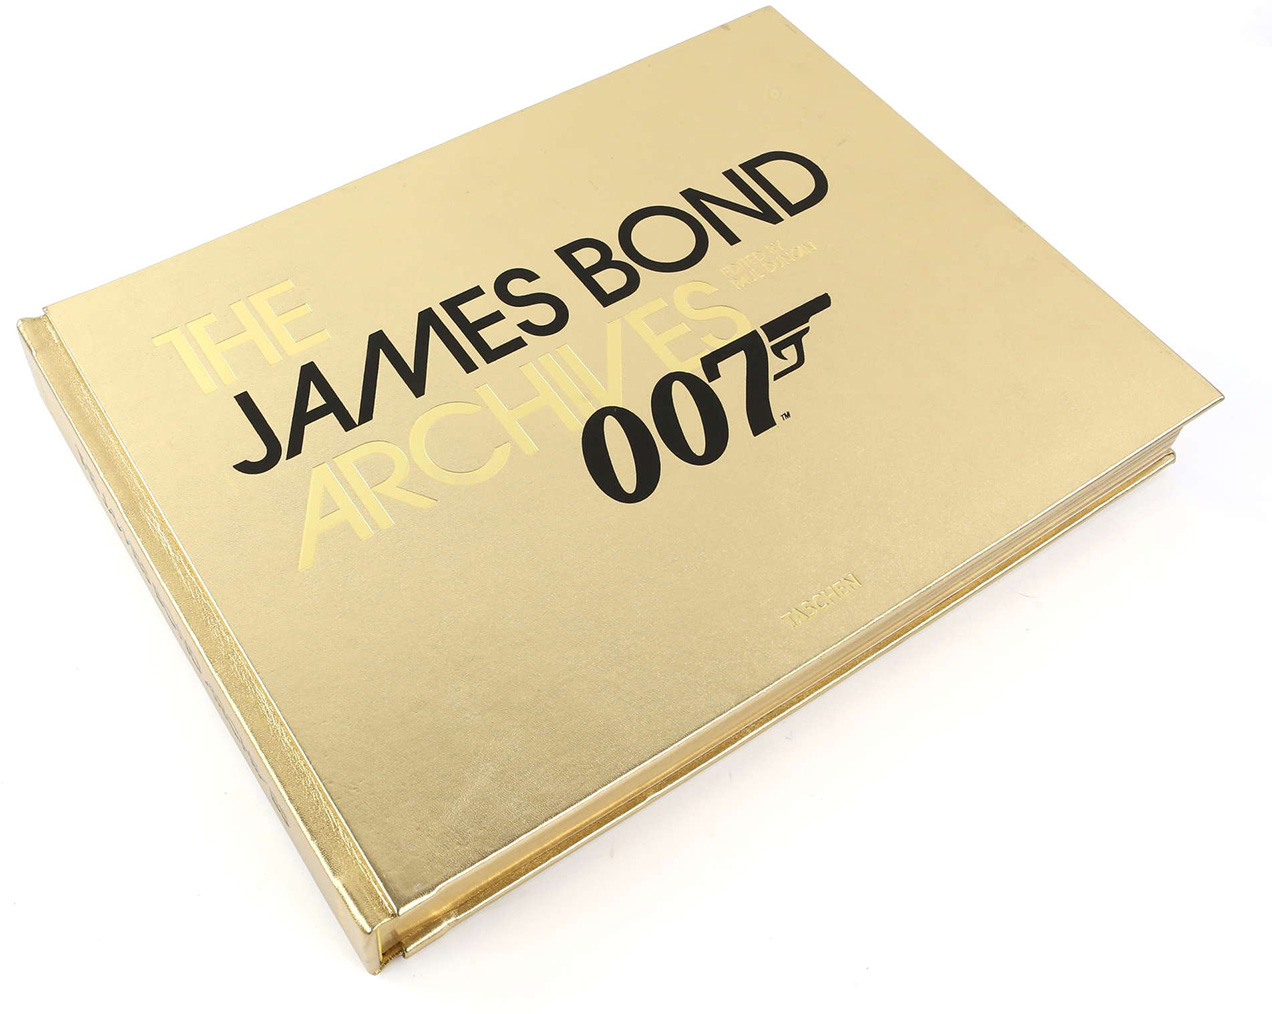 James Bond Archive Gold Limited Edition Auction